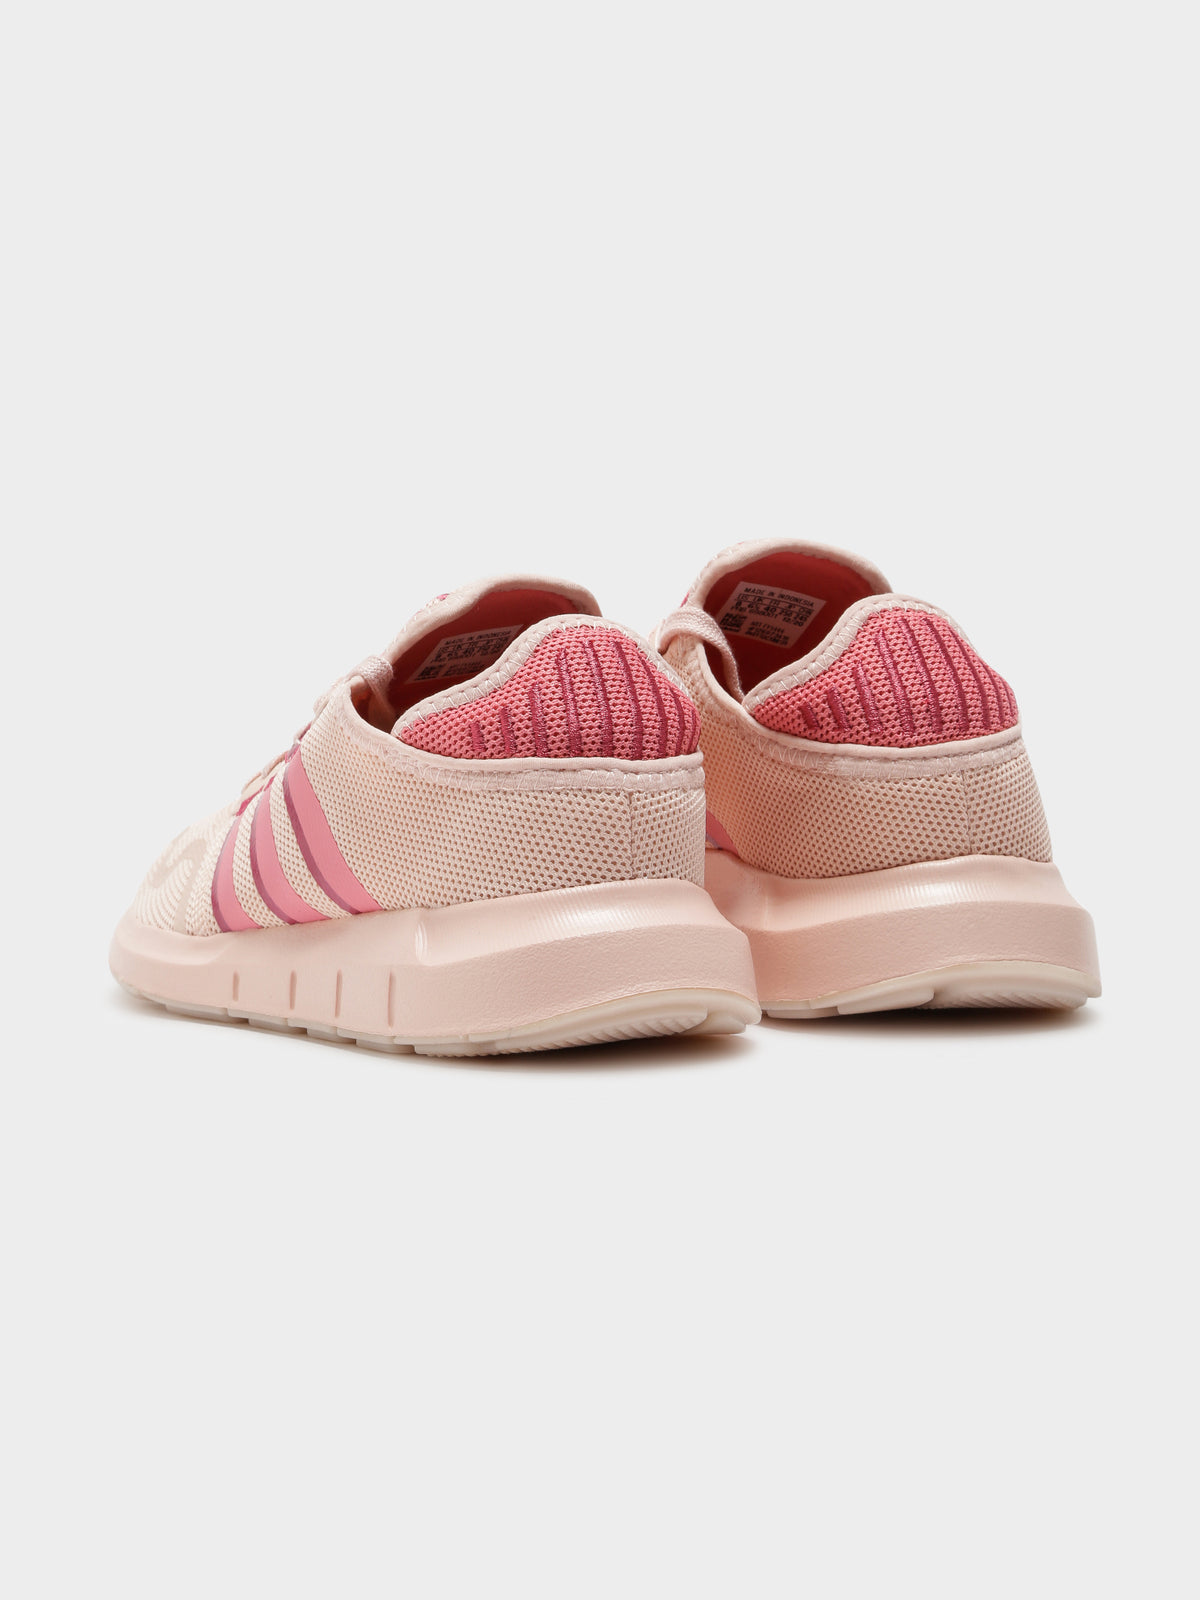 Womens Swift Run X Sneakers in Pink